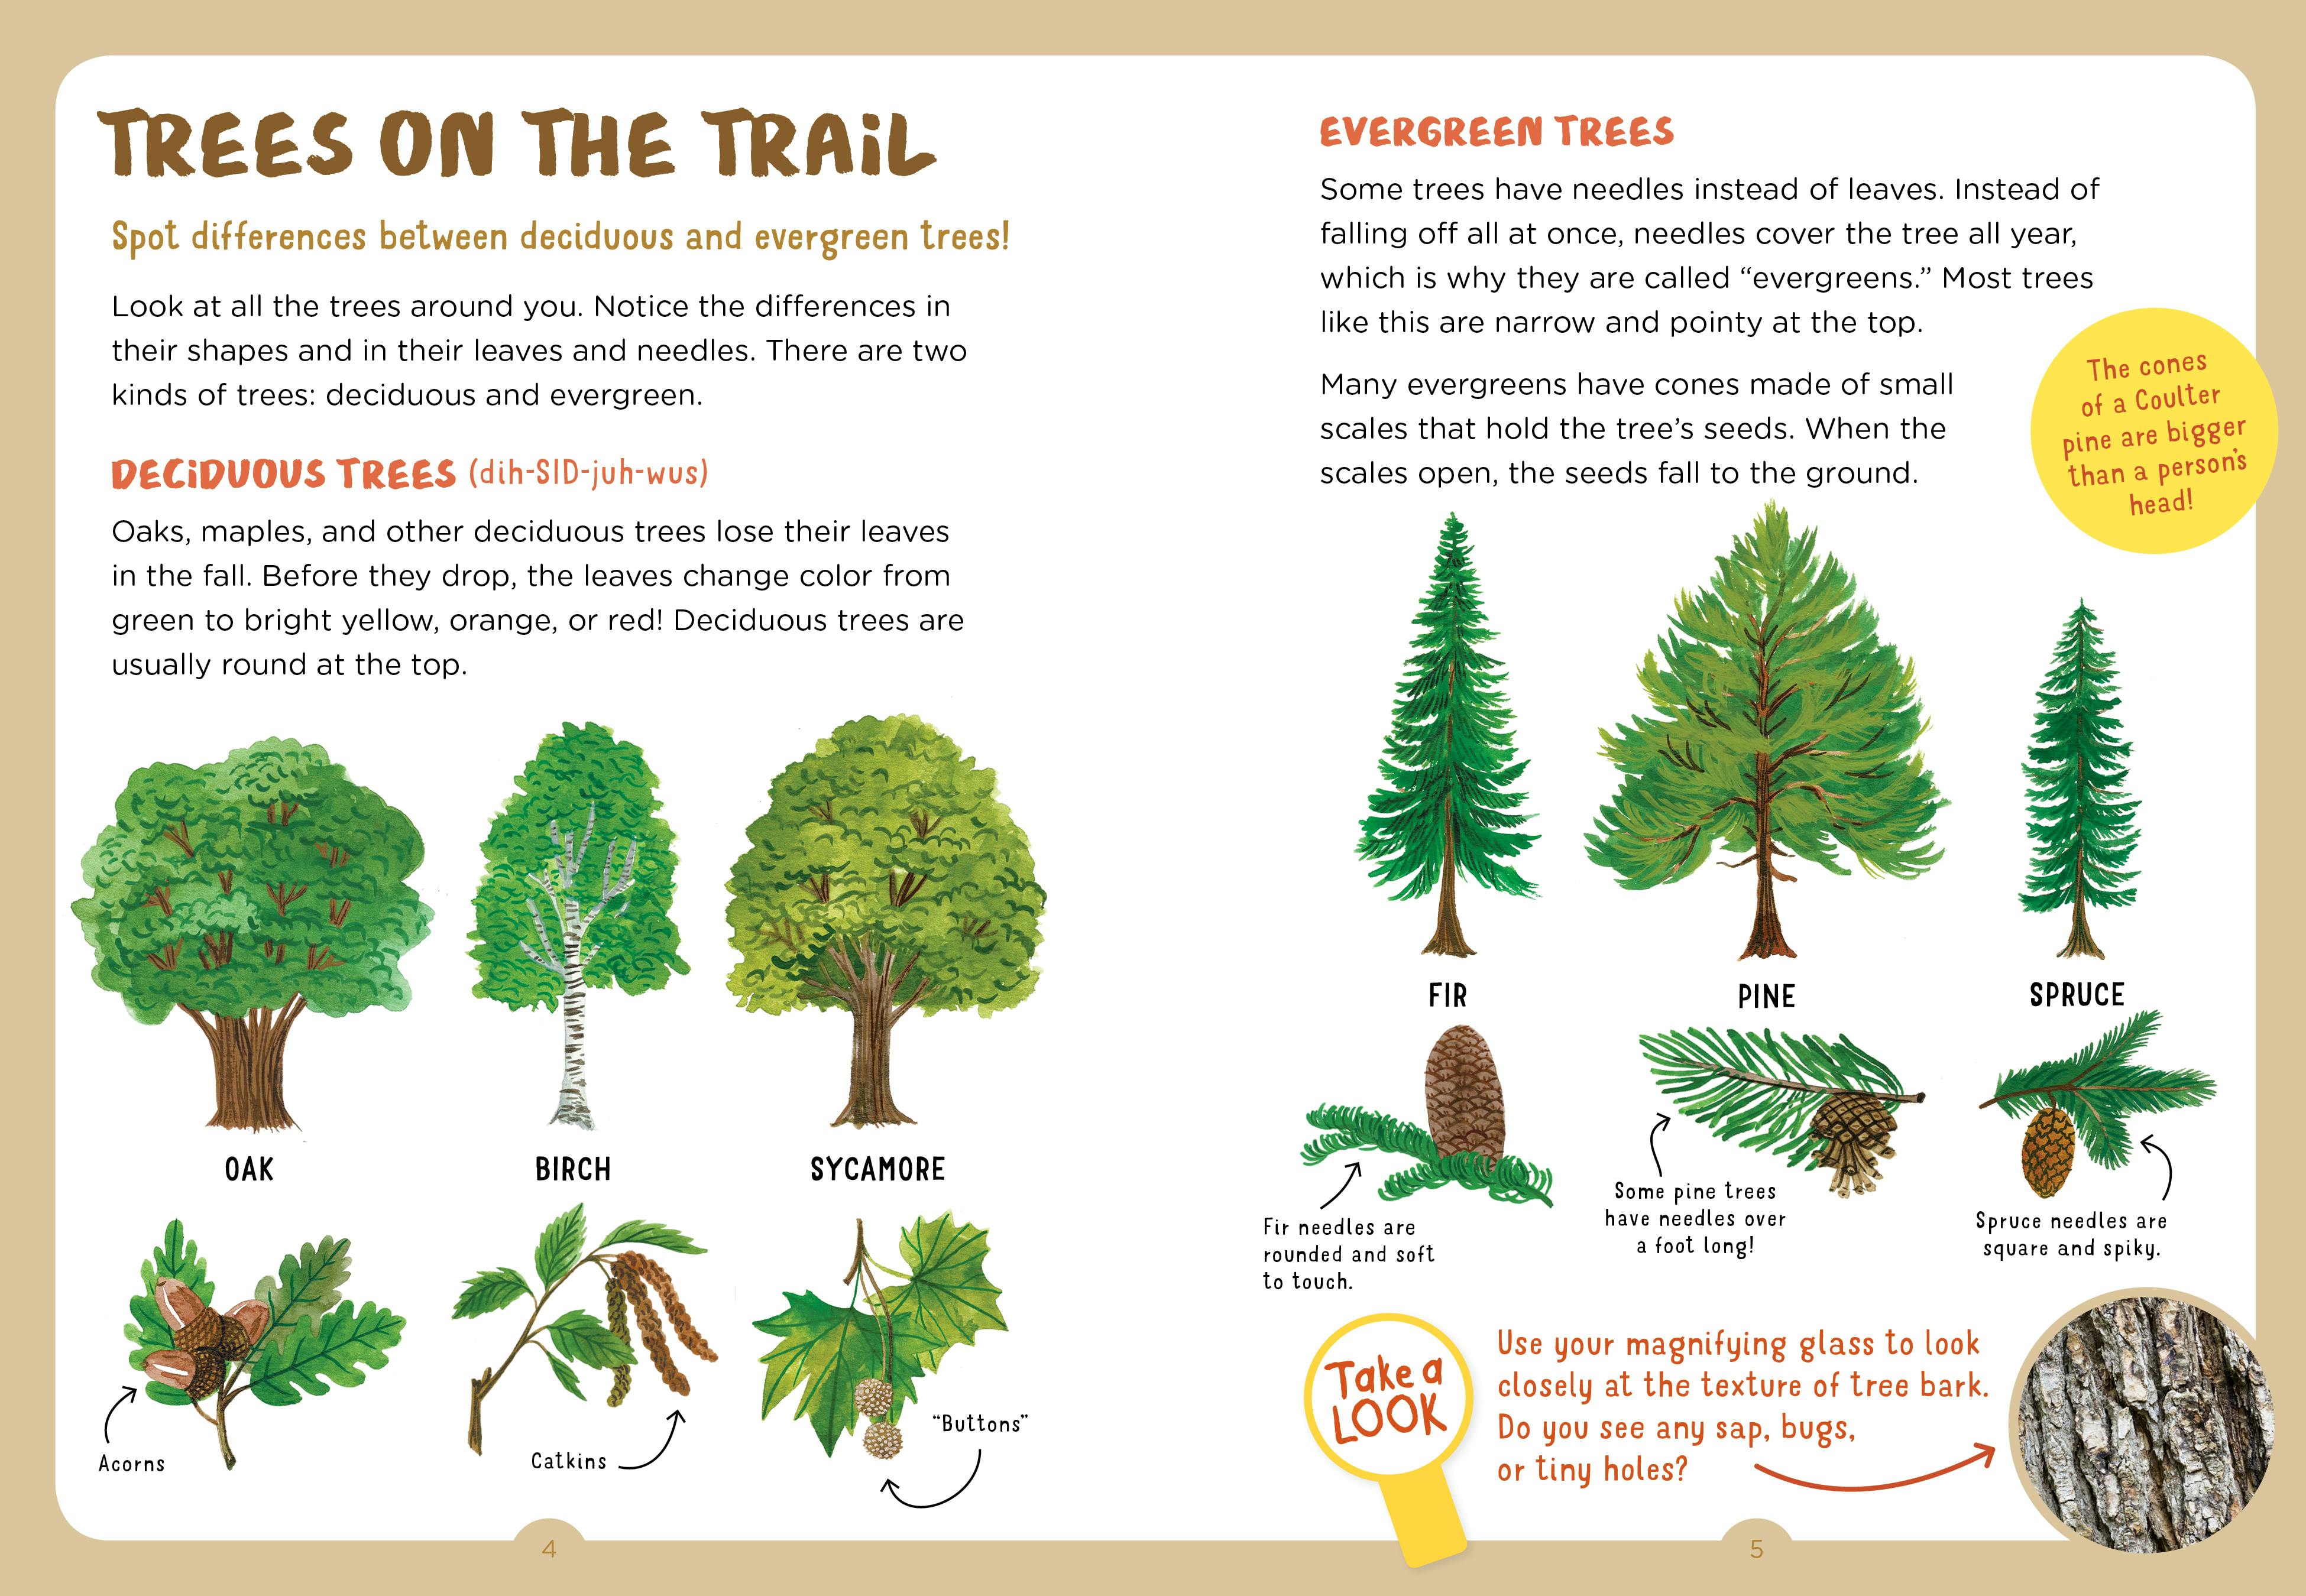 Workman Publishing Backpack Explorer: On the Nature Trail